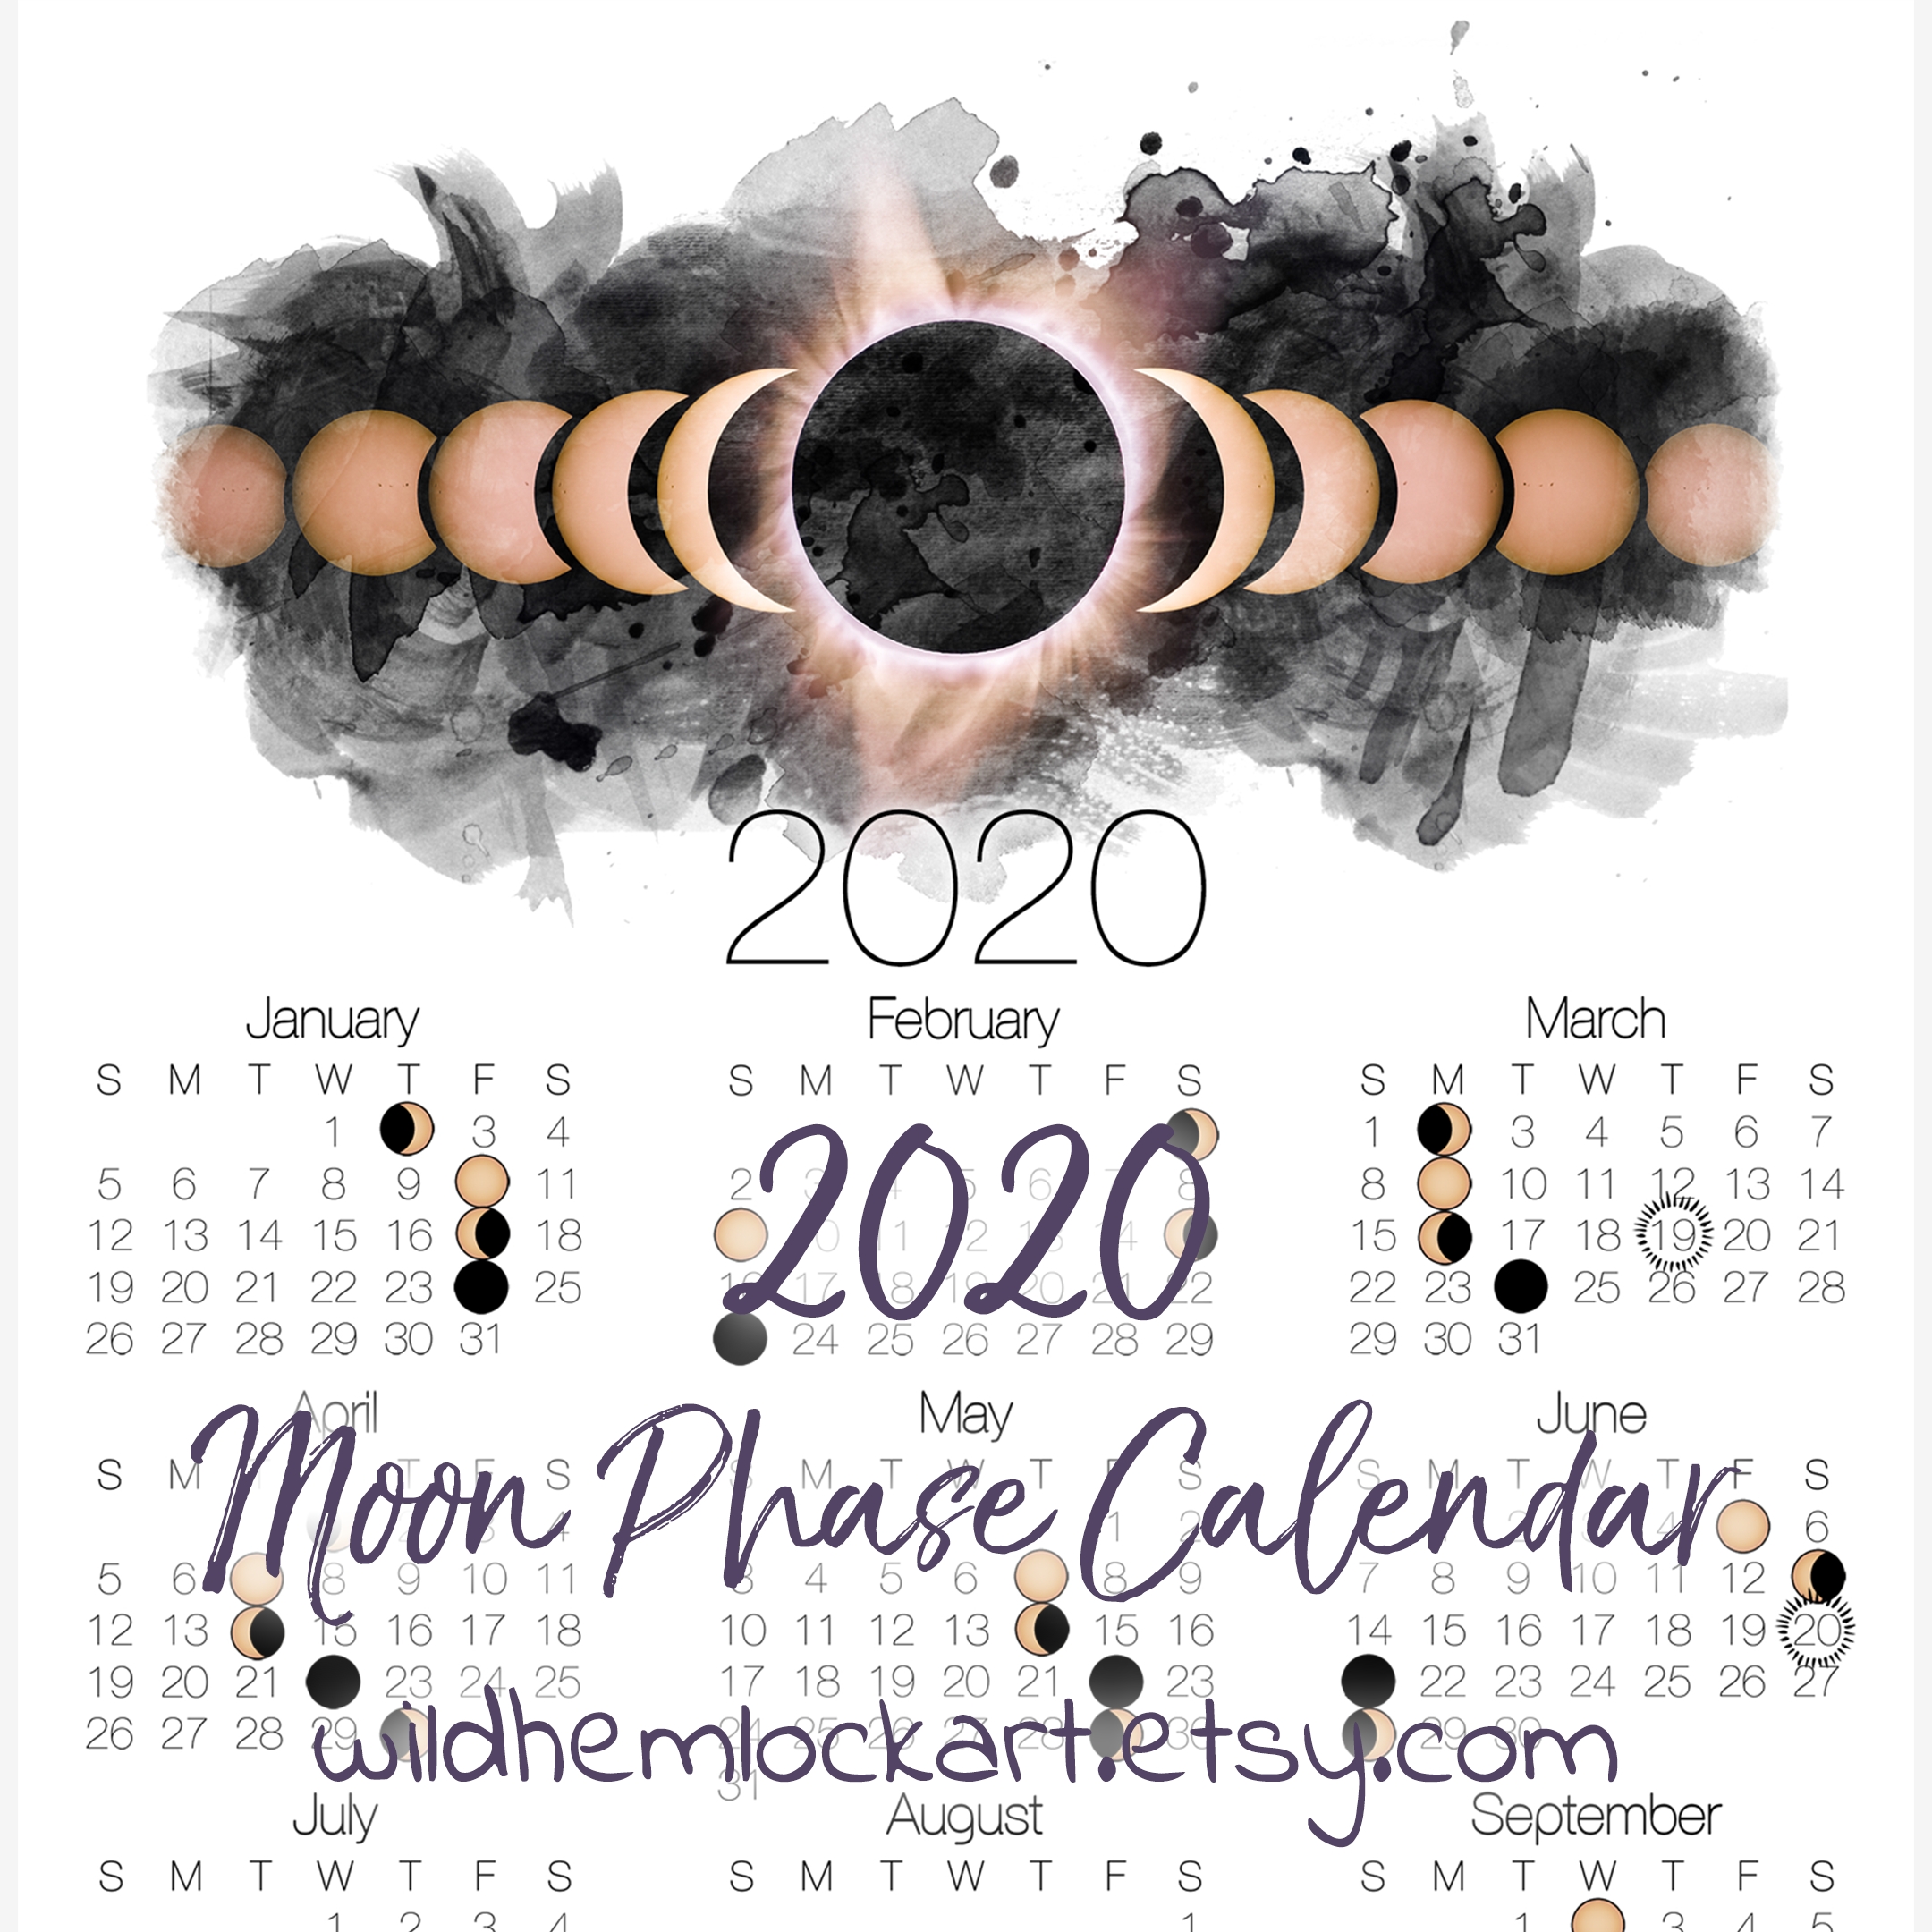 2020 Moon Phase Calendar - Lunar Calendar With Solar Eclipse Exceptional March 2020 Lunar Calendar